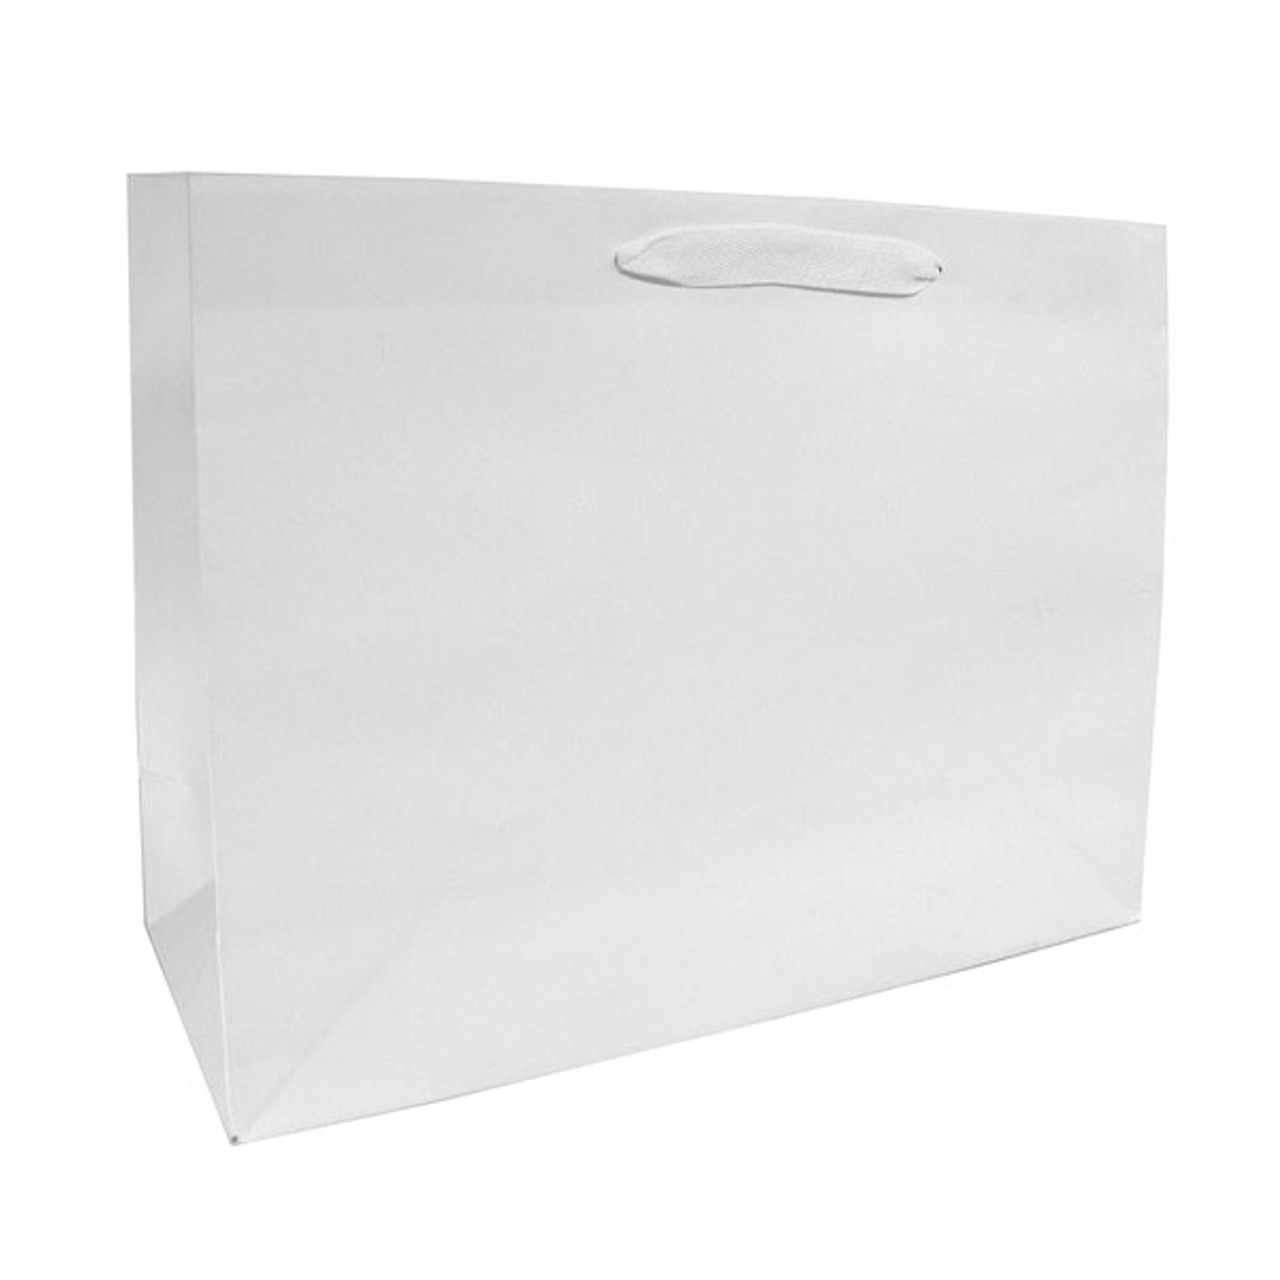 White Paper Bags - Buy Custom Paper Bags Online At Best Price - Printo.in